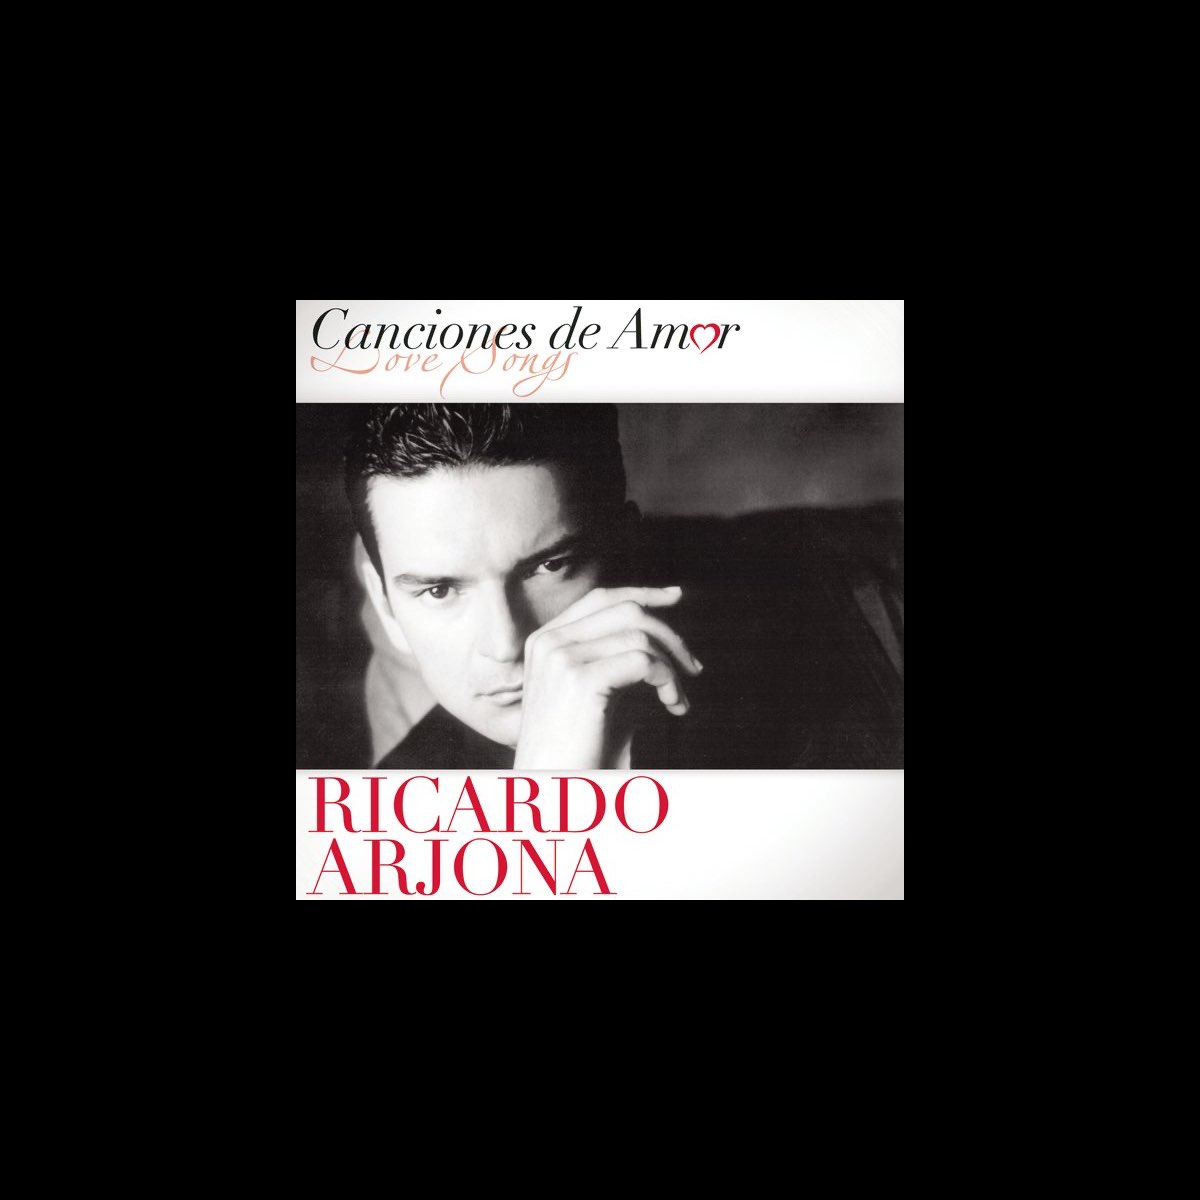 Negro - Album by Ricardo Arjona